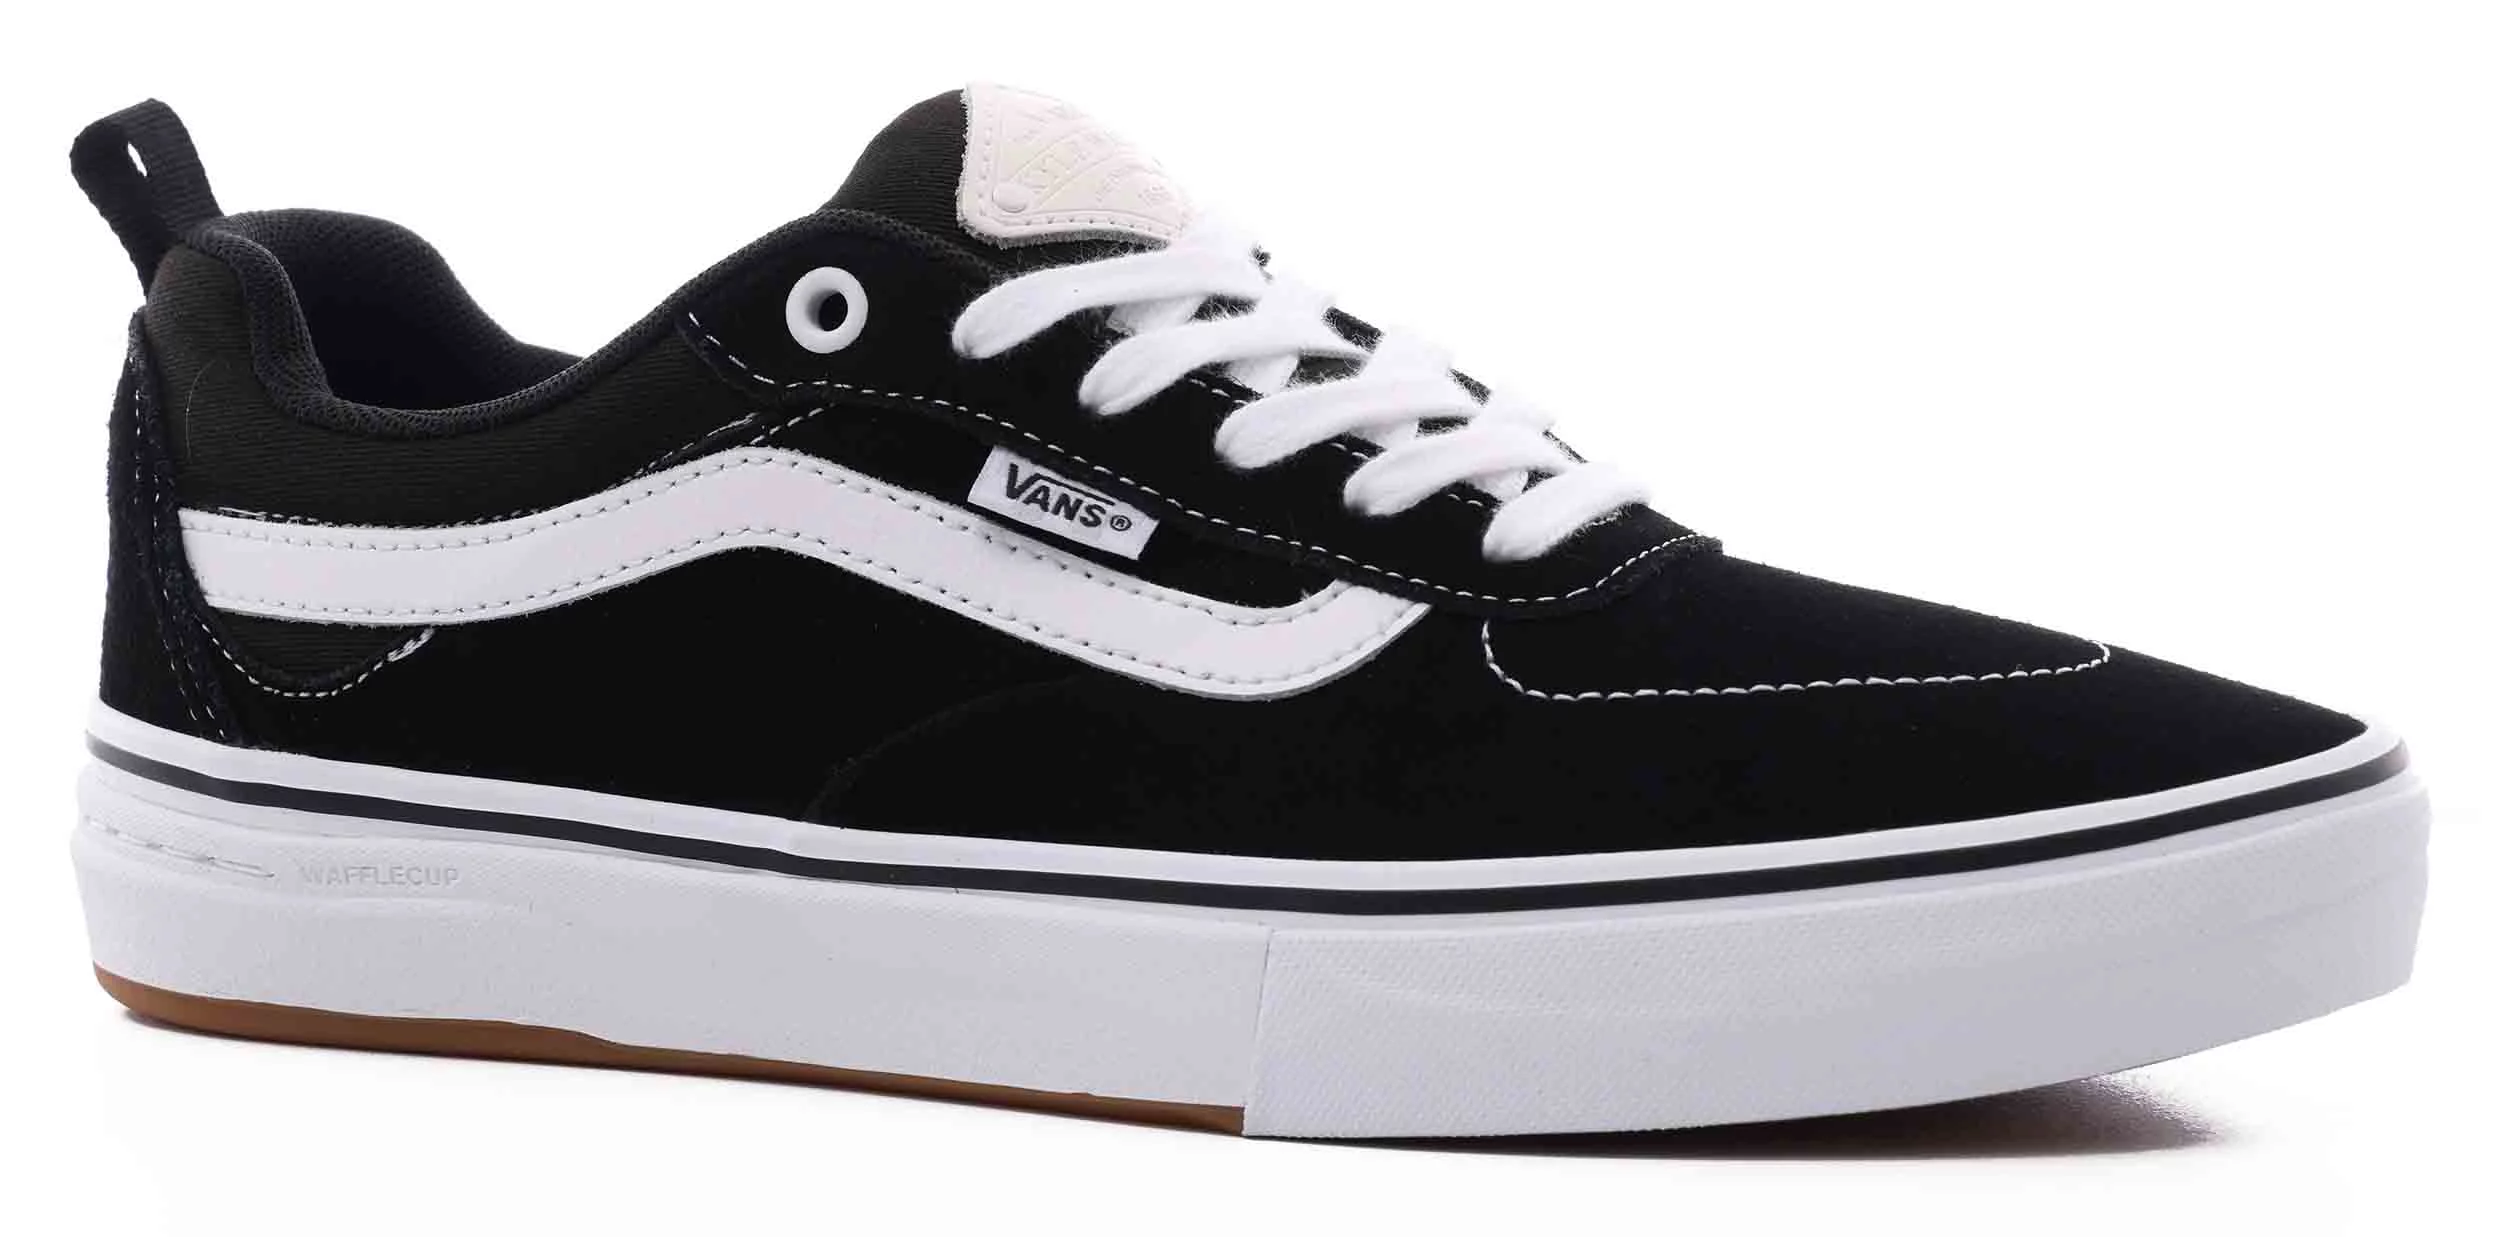 positie rok voorspelling Vans Kyle Walker Pro Skate Shoes - black/white - Free Shipping | Tactics